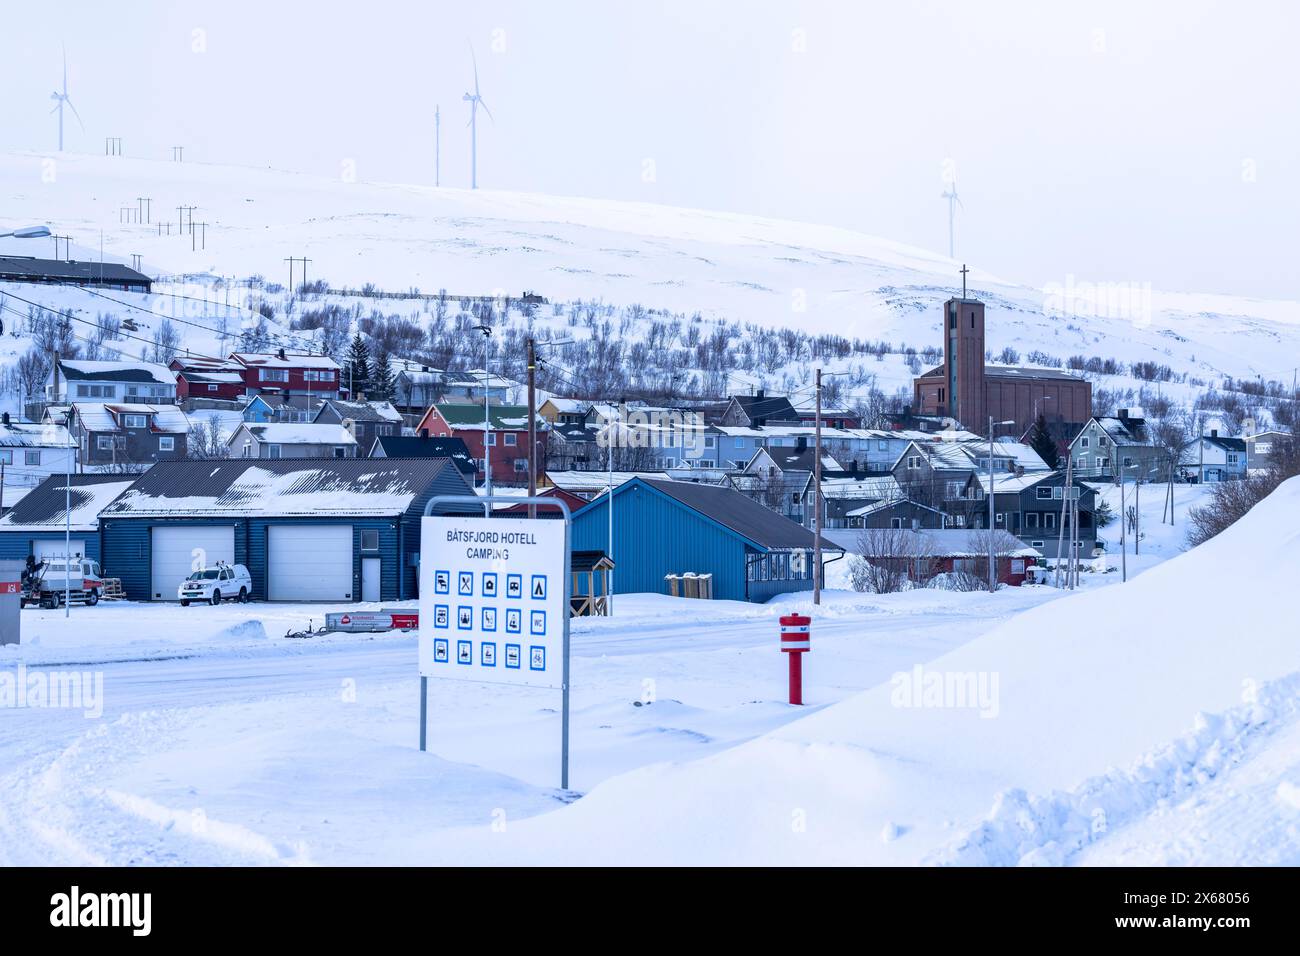 Batsfjord - municipalité dans le Finnmark norvégien Fylke, Varanger Peninsula, Norvège, Banque D'Images